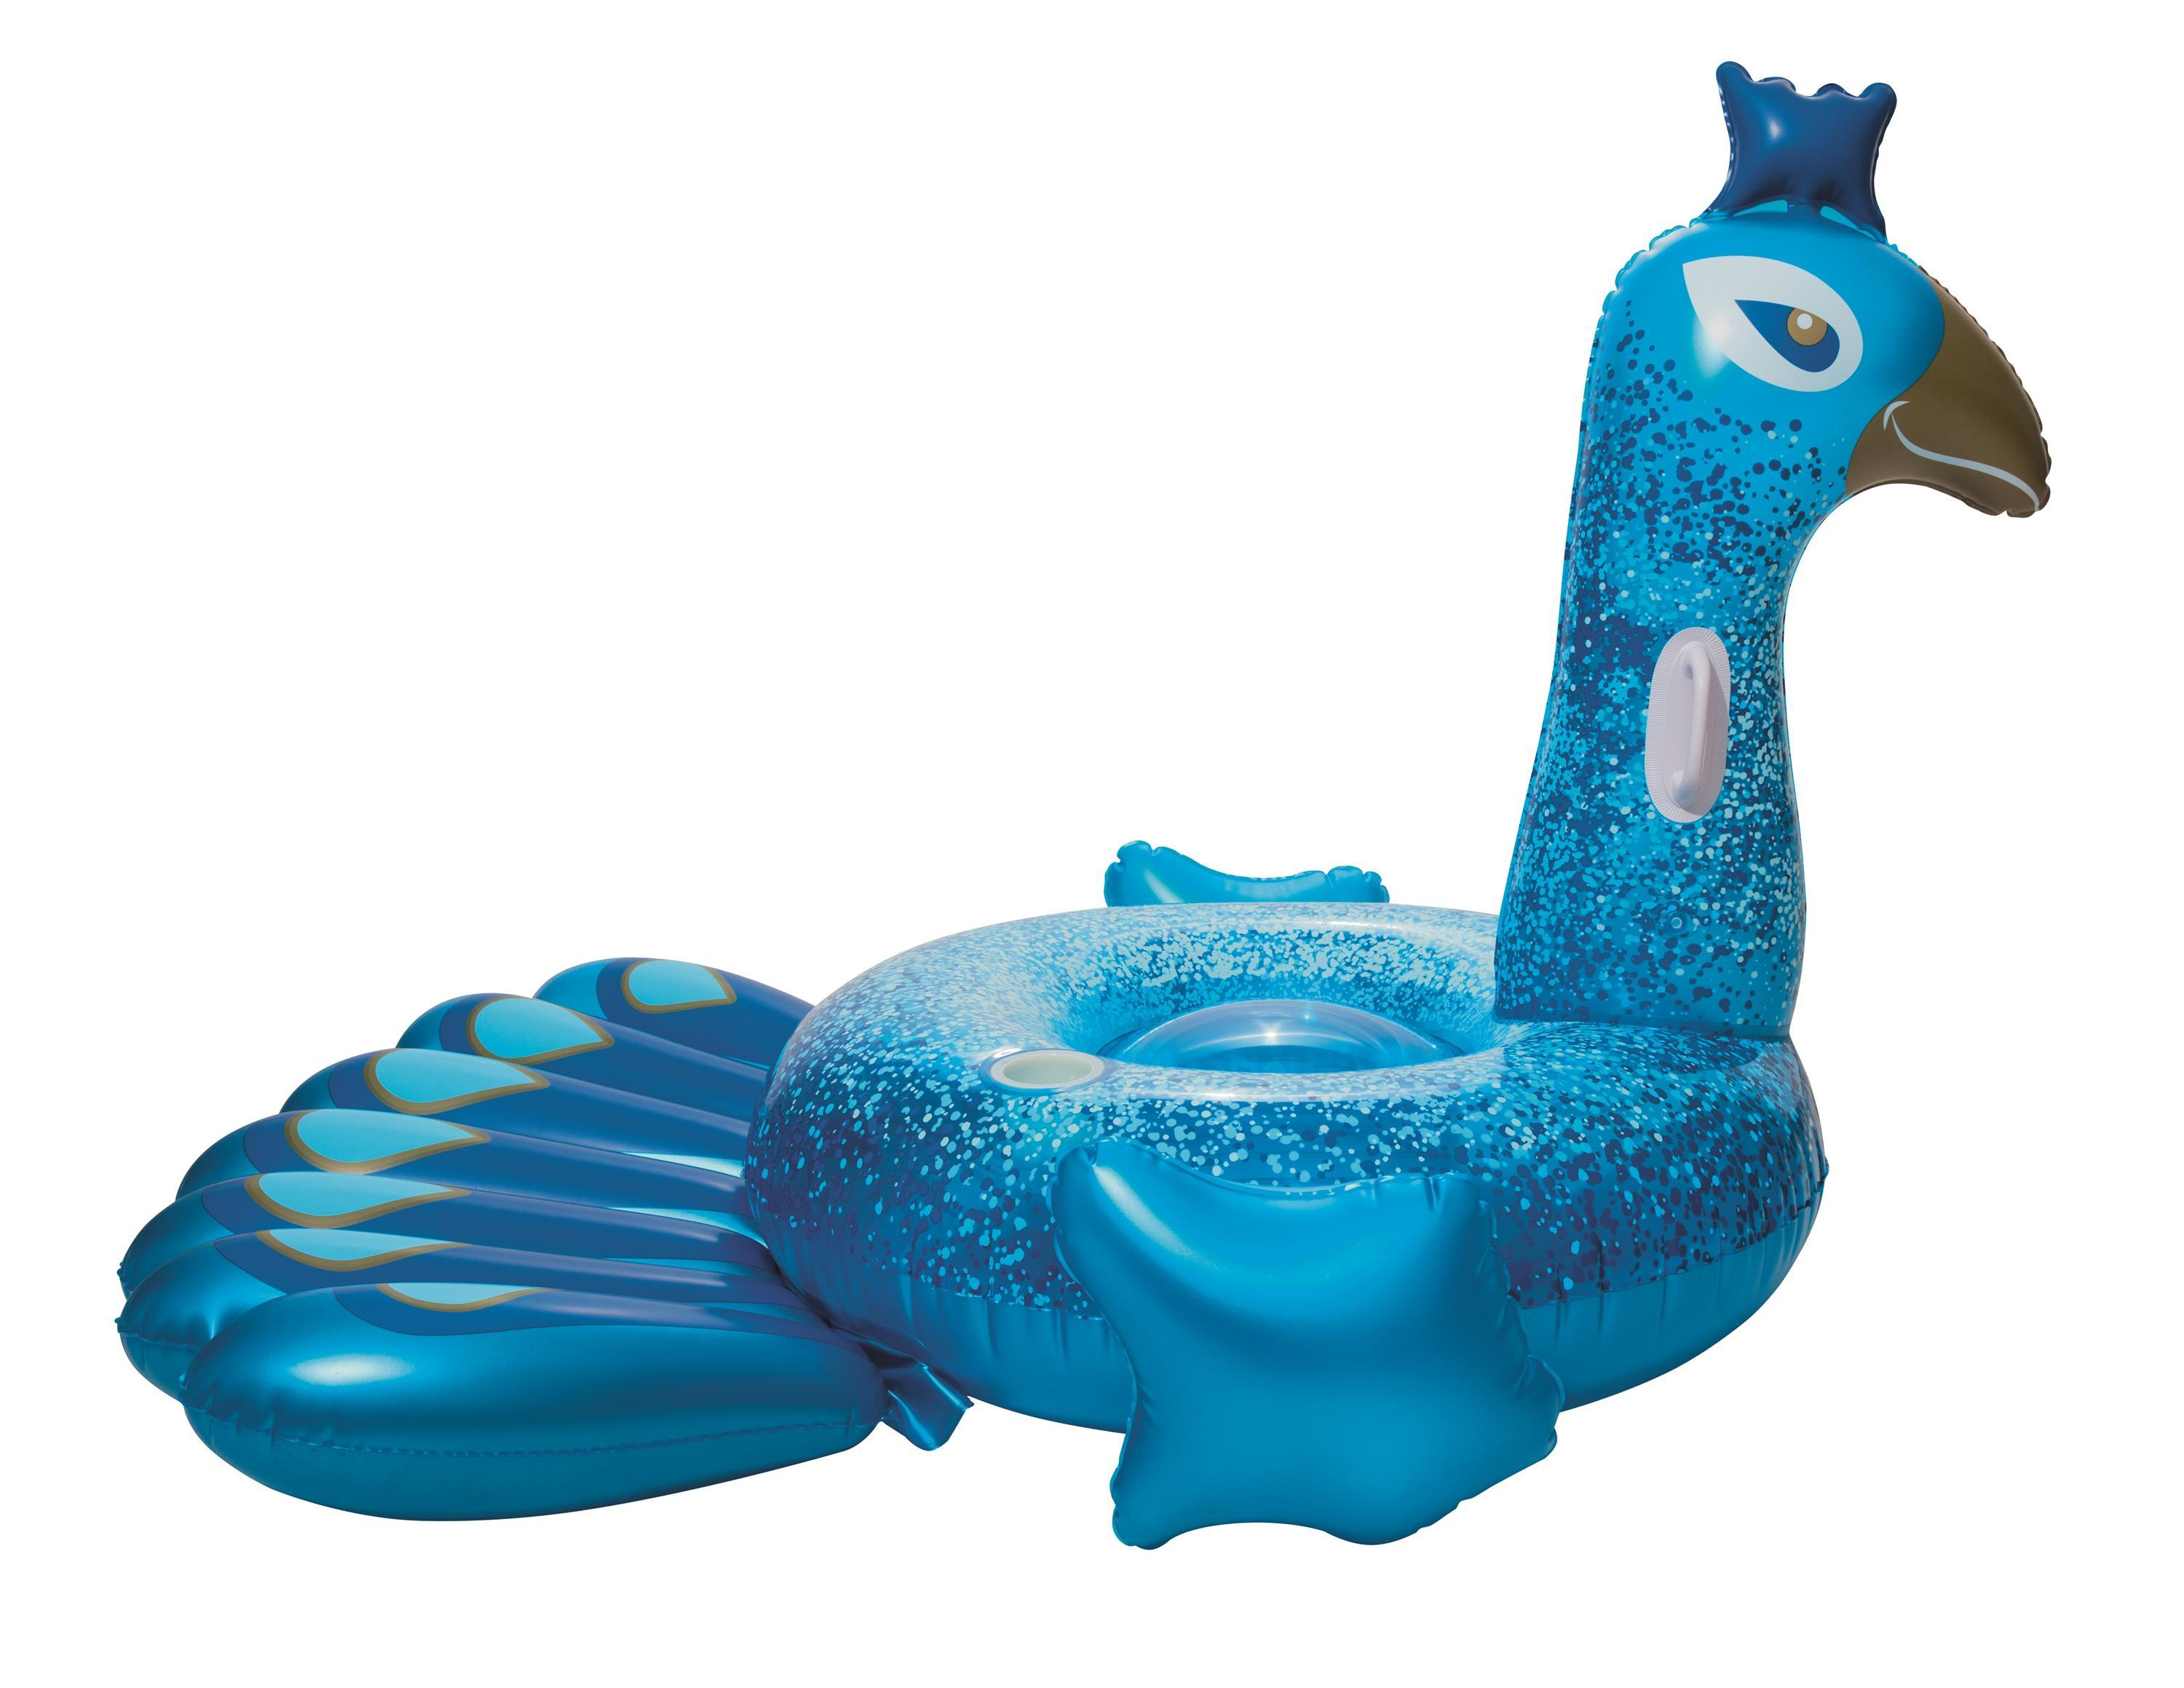 Peacock mount